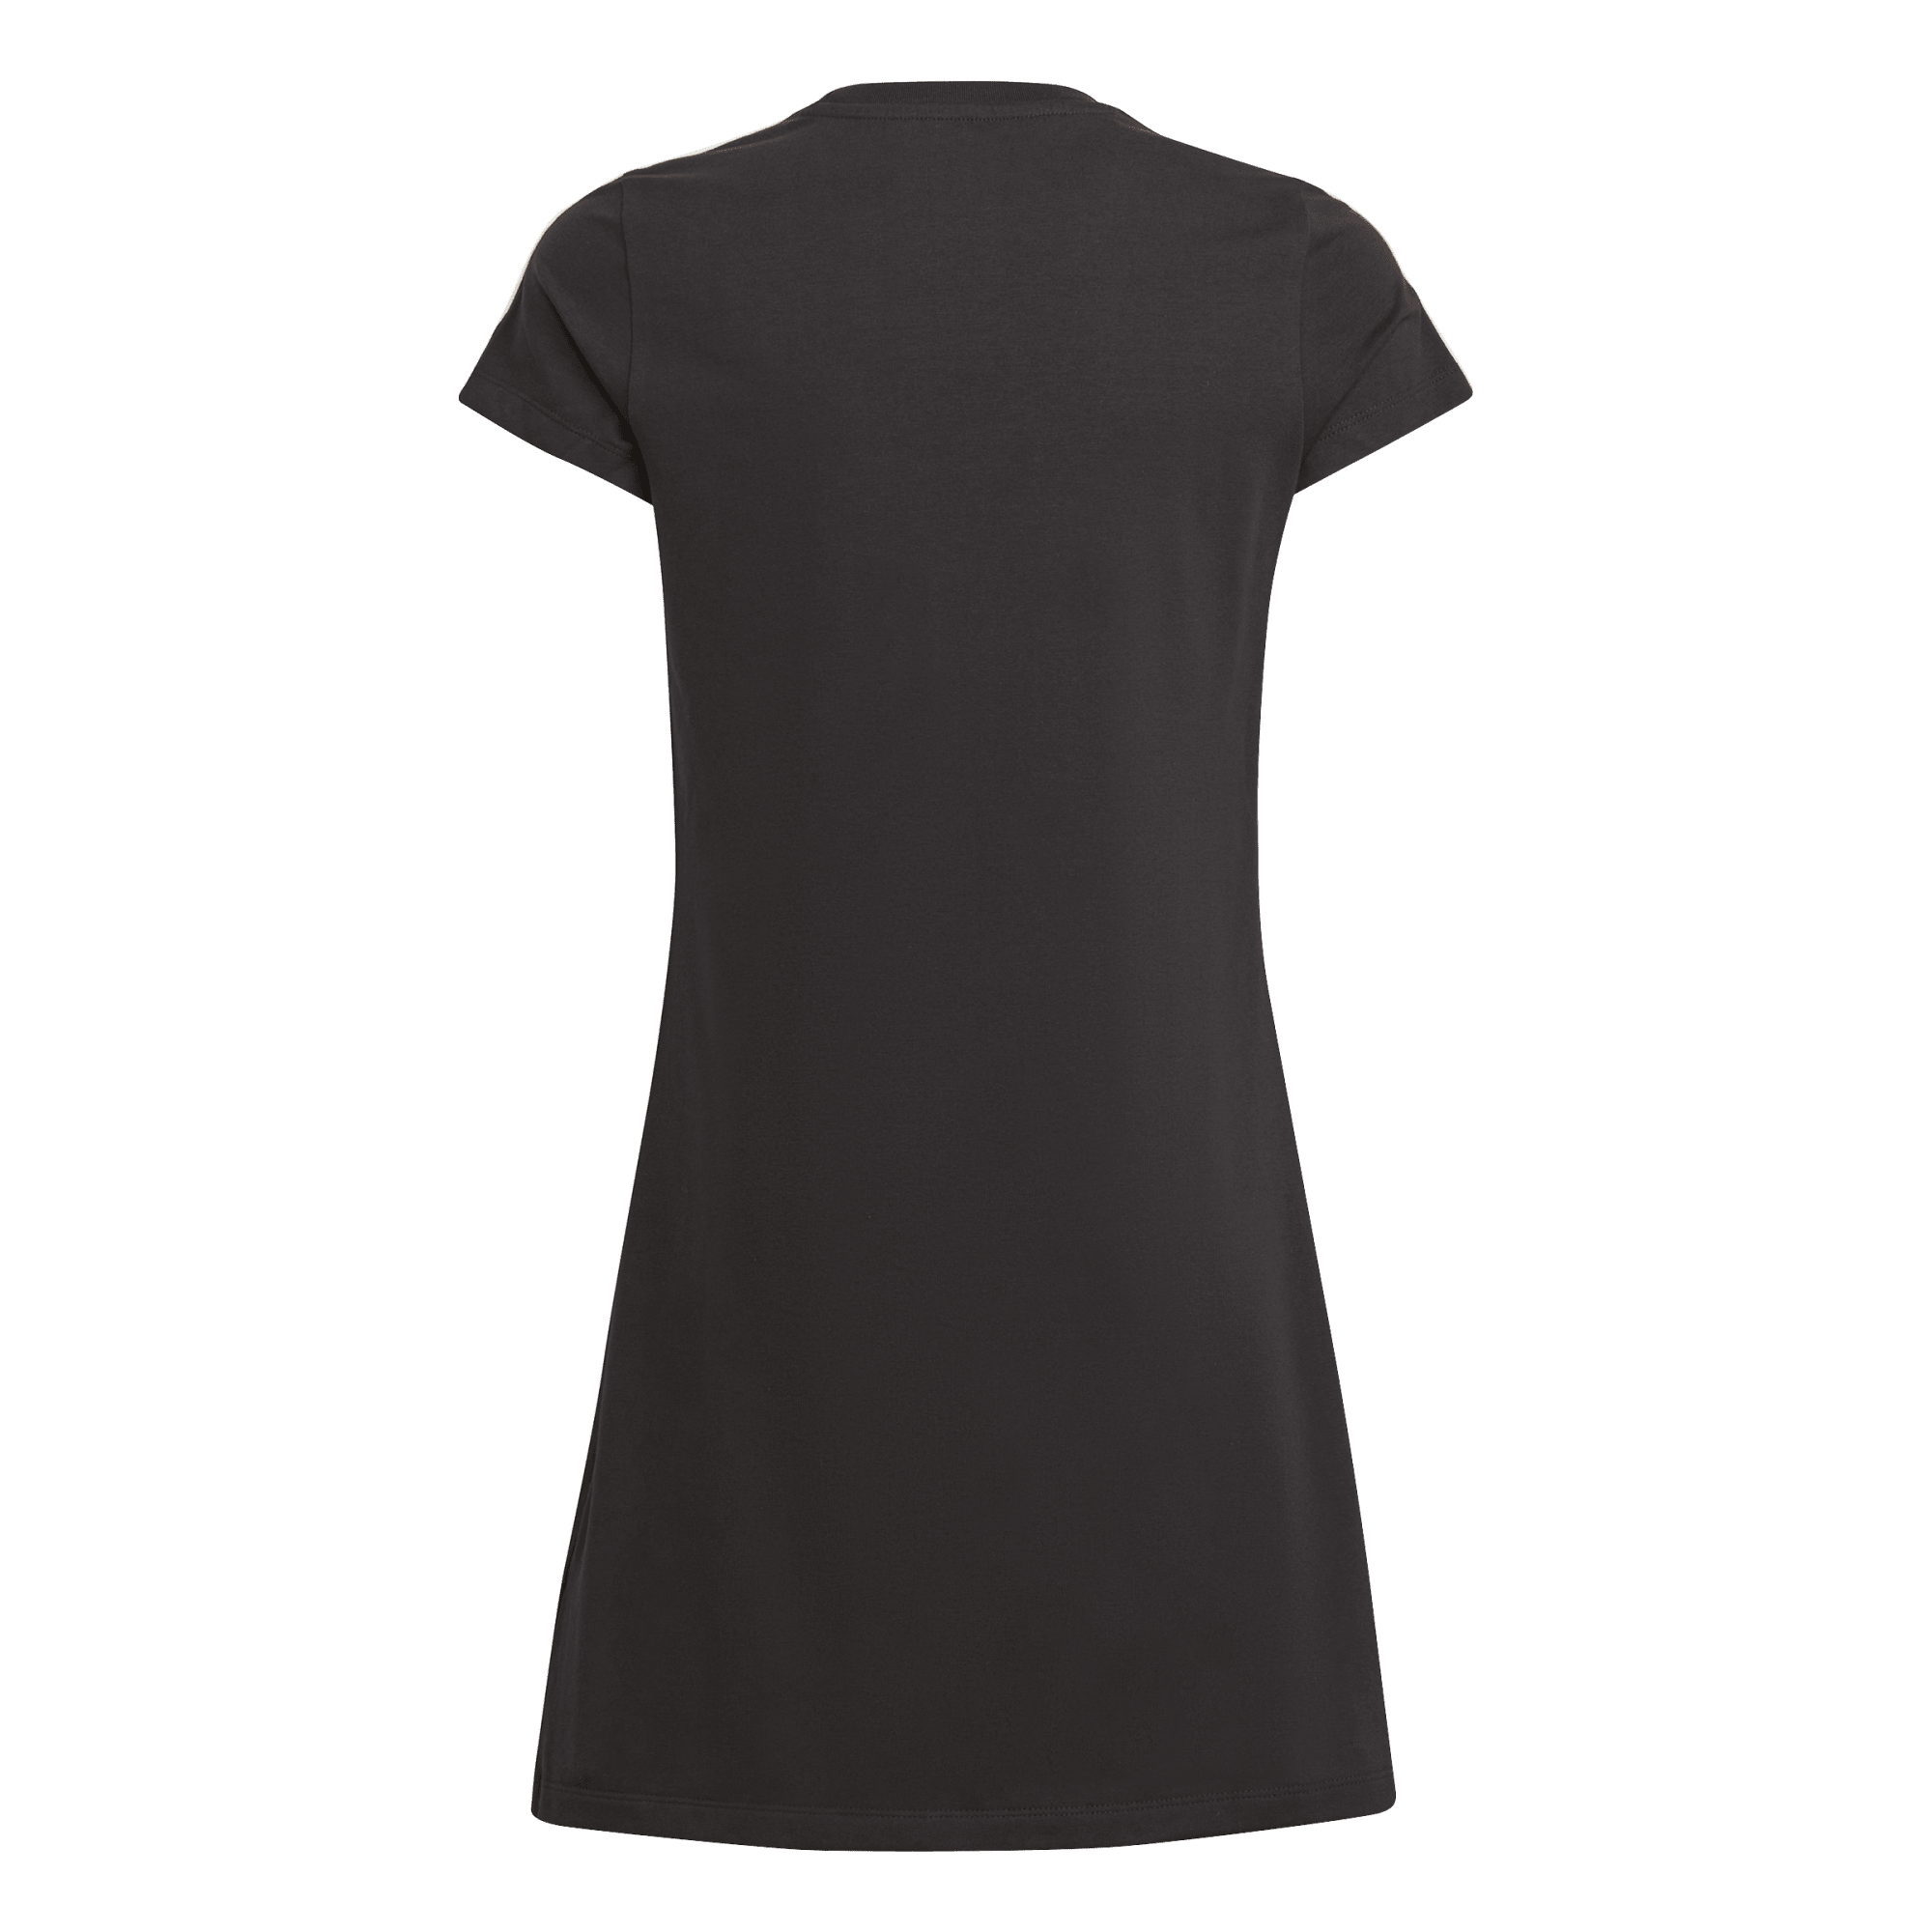 Adicolor Dress (GS)